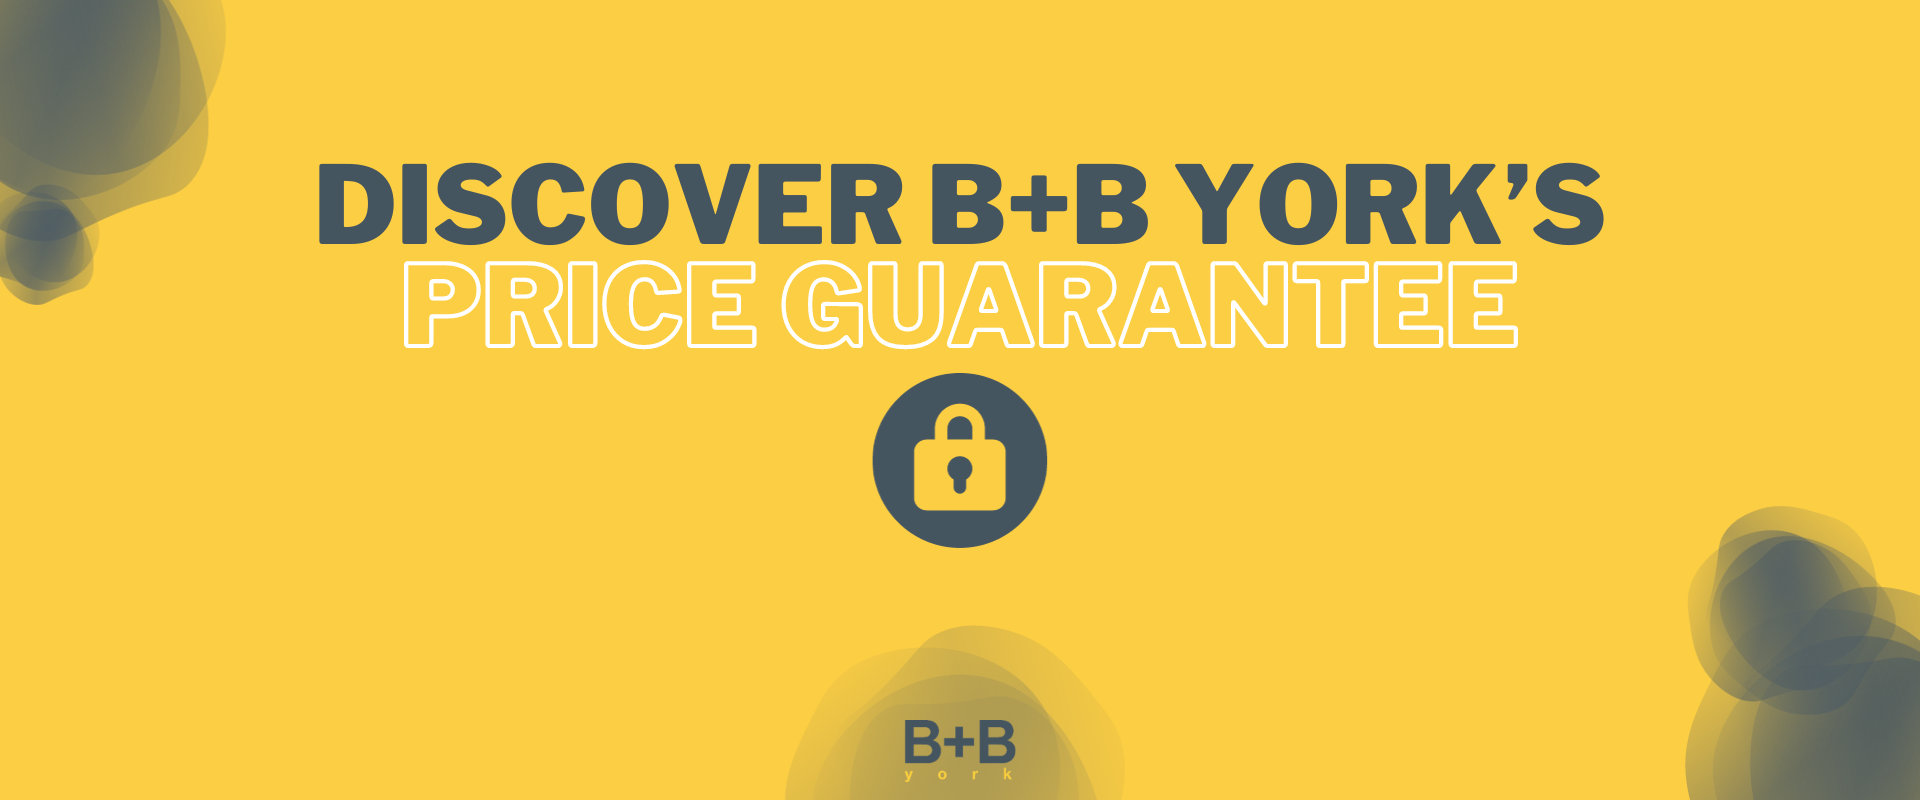 B+B York's Price Guarantee